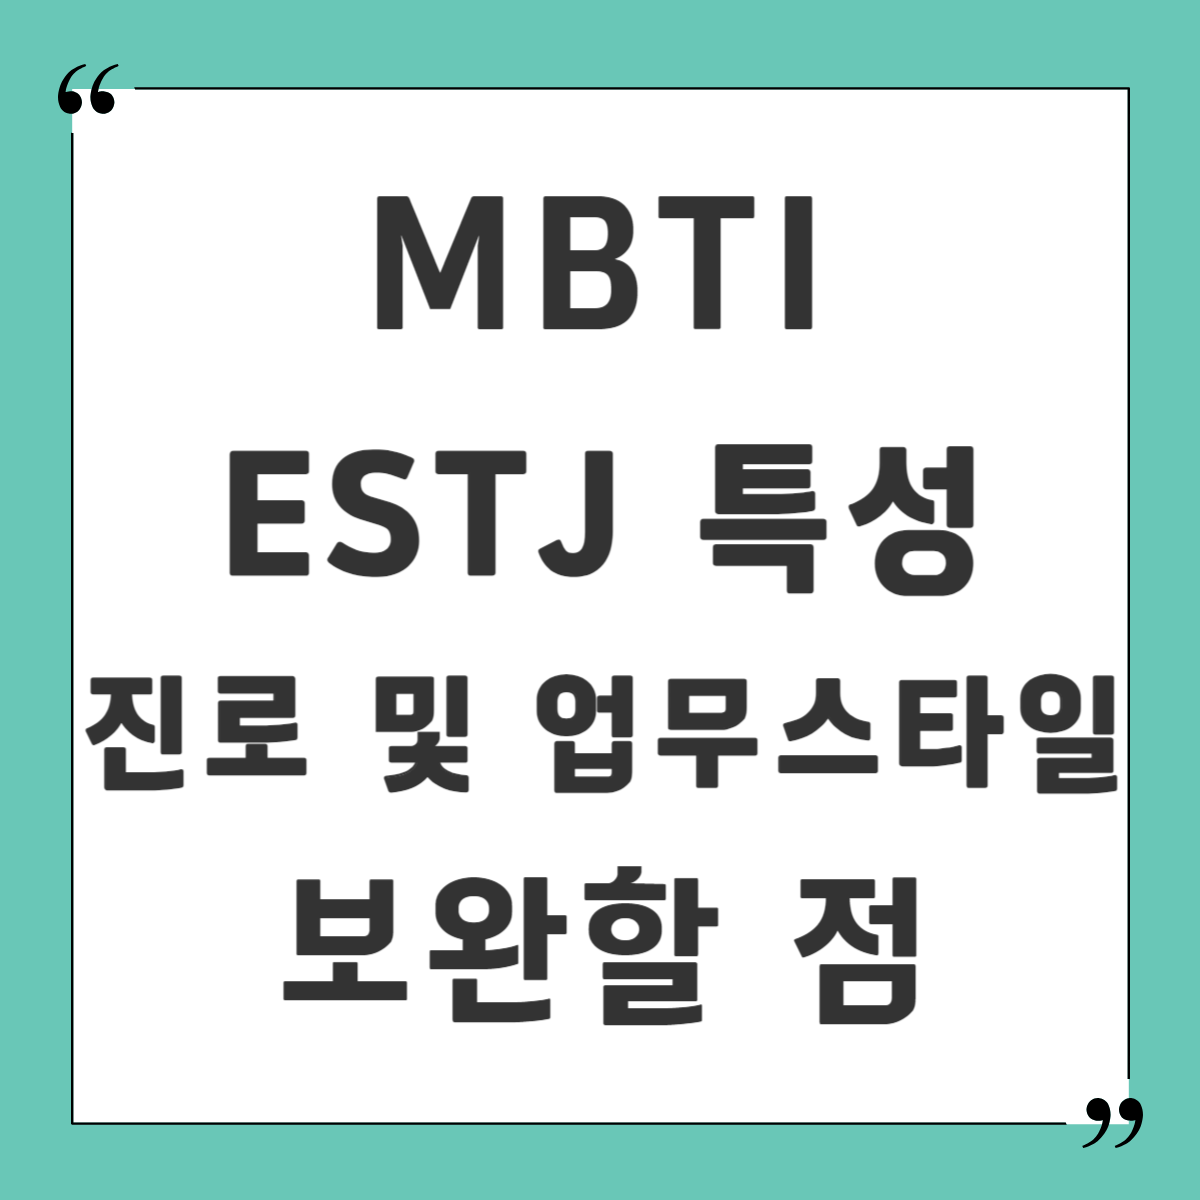 MBTI ESTJ 성격 특성 진로 보완할 점 사진